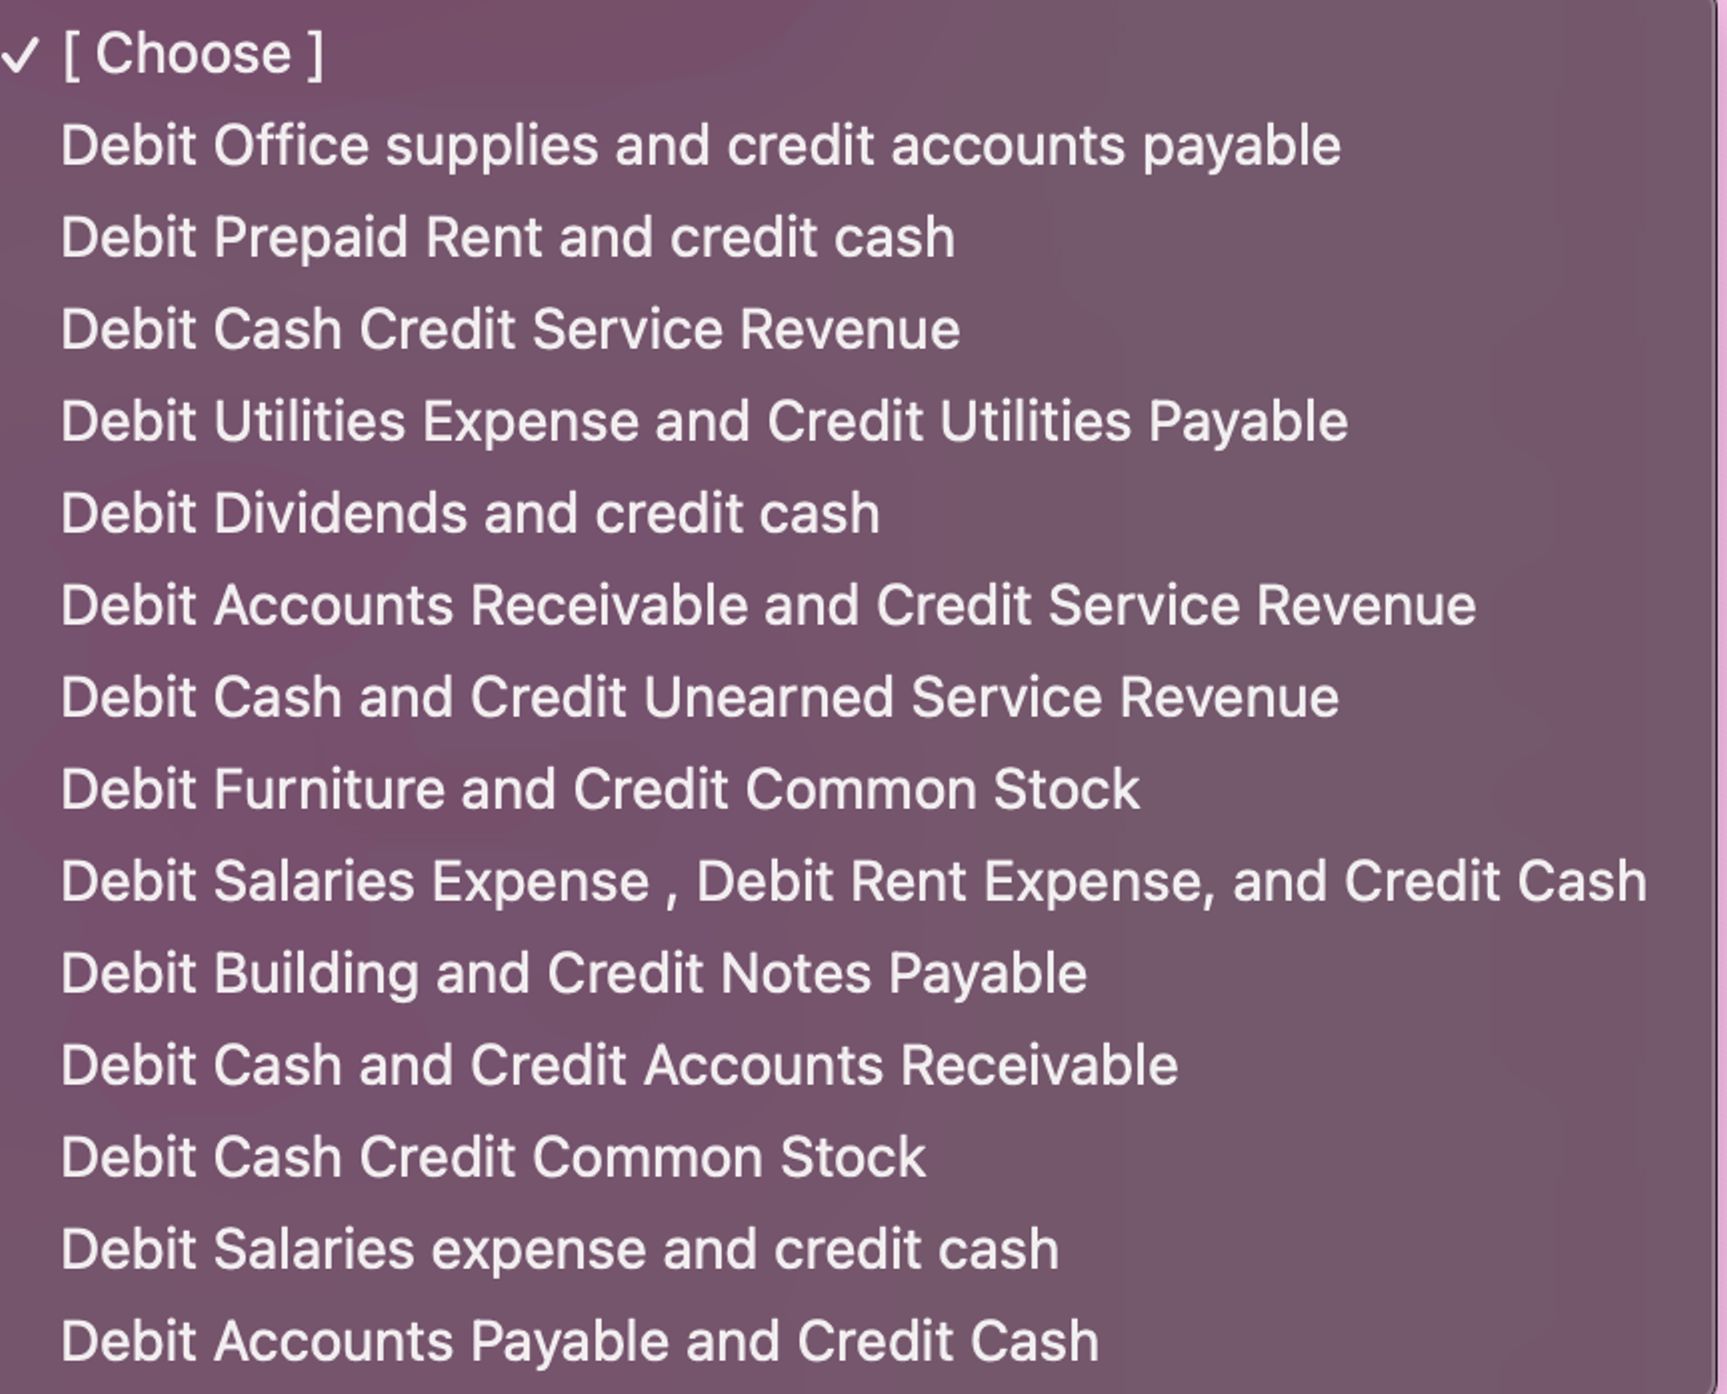 ach transaction debit credit